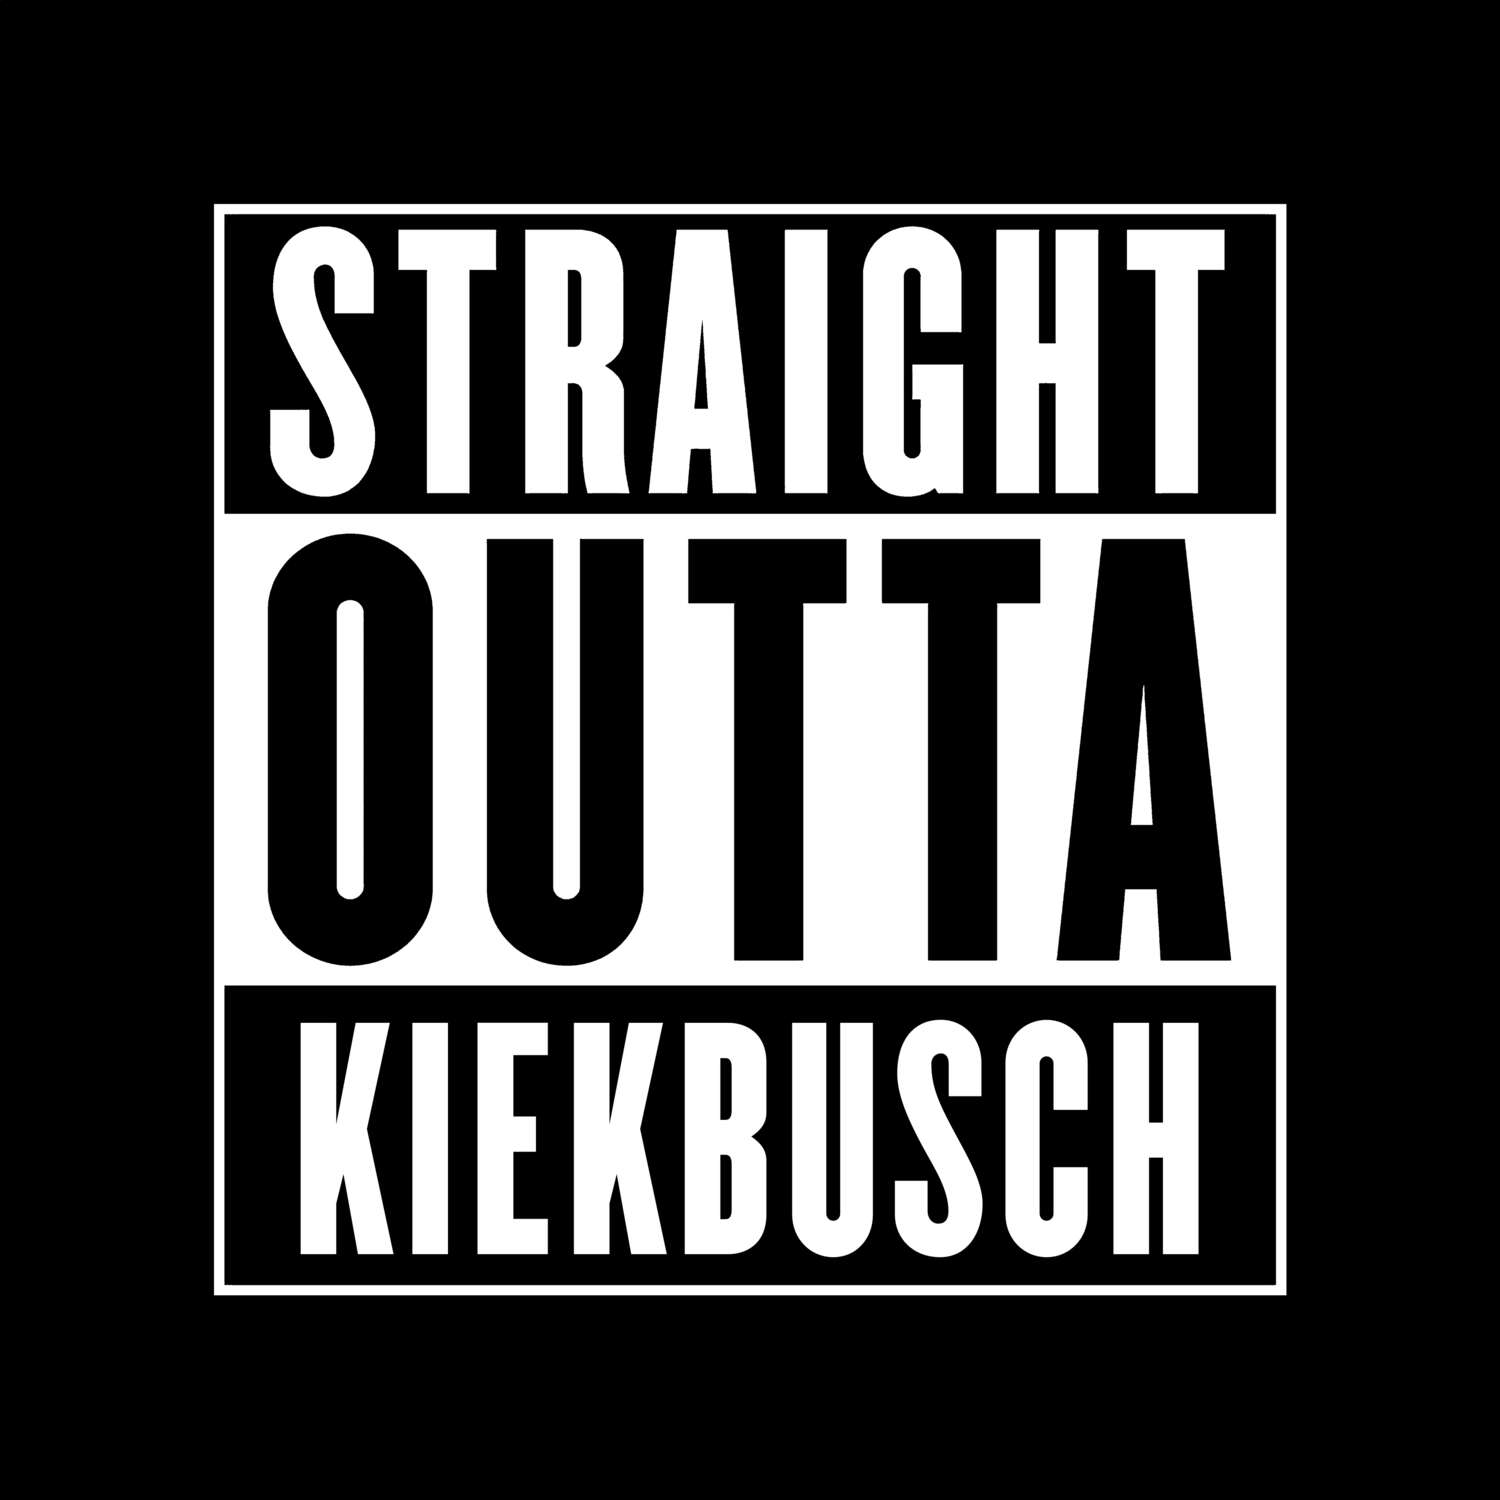 Kiekbusch T-Shirt »Straight Outta«